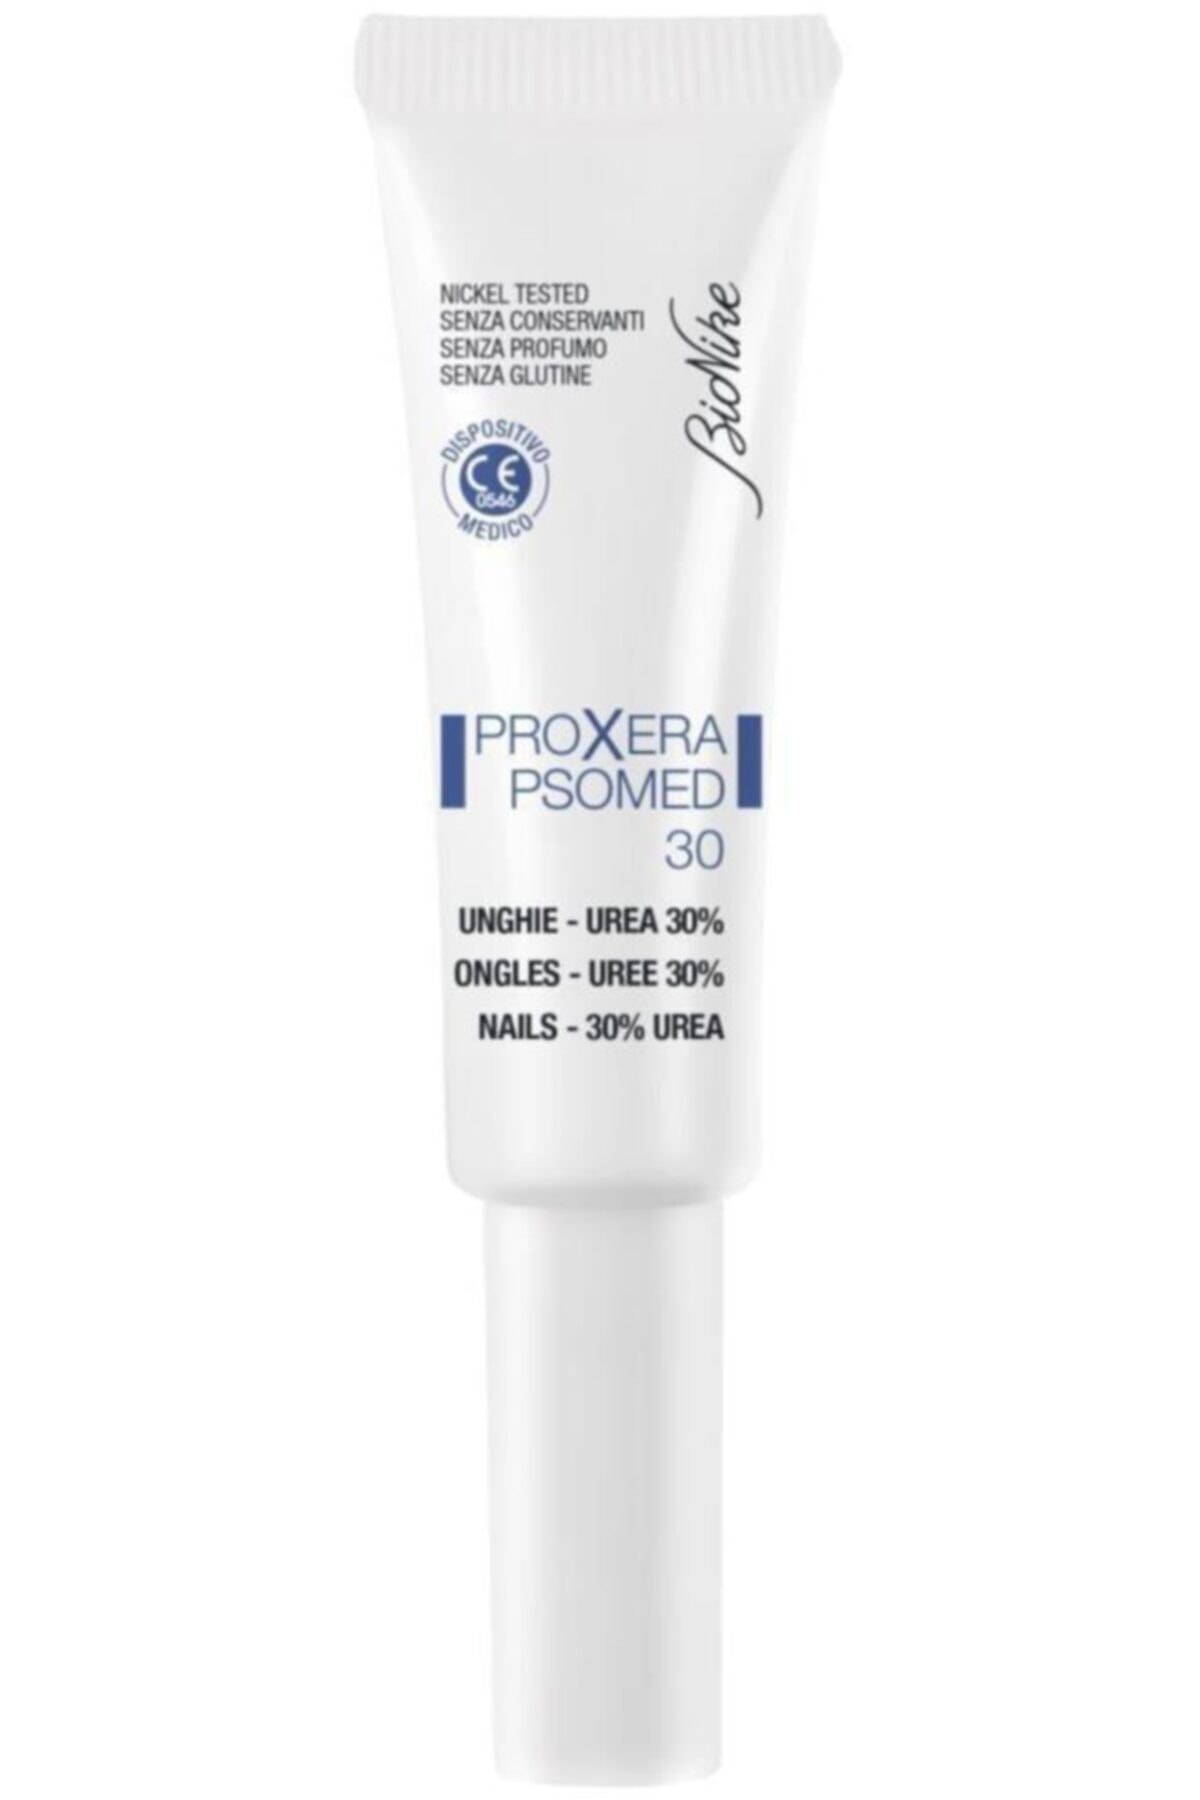 BioNike Proxera Psomed 30 Nails 30% Urea Mini Tube 10 ml